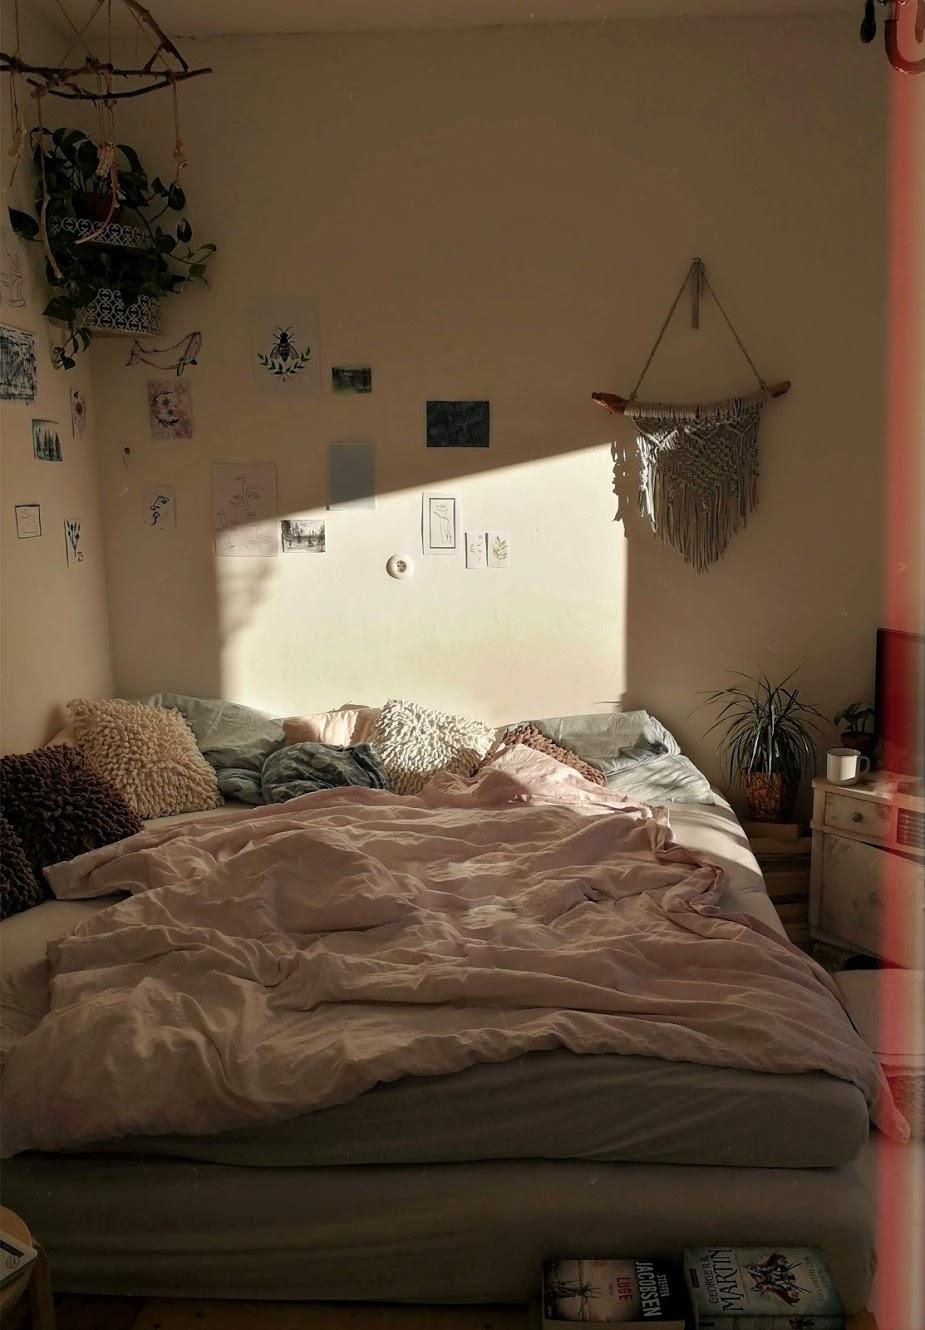 #room #bed #light #walldecor #wall #myart #macramee #livingdecor #decoridea